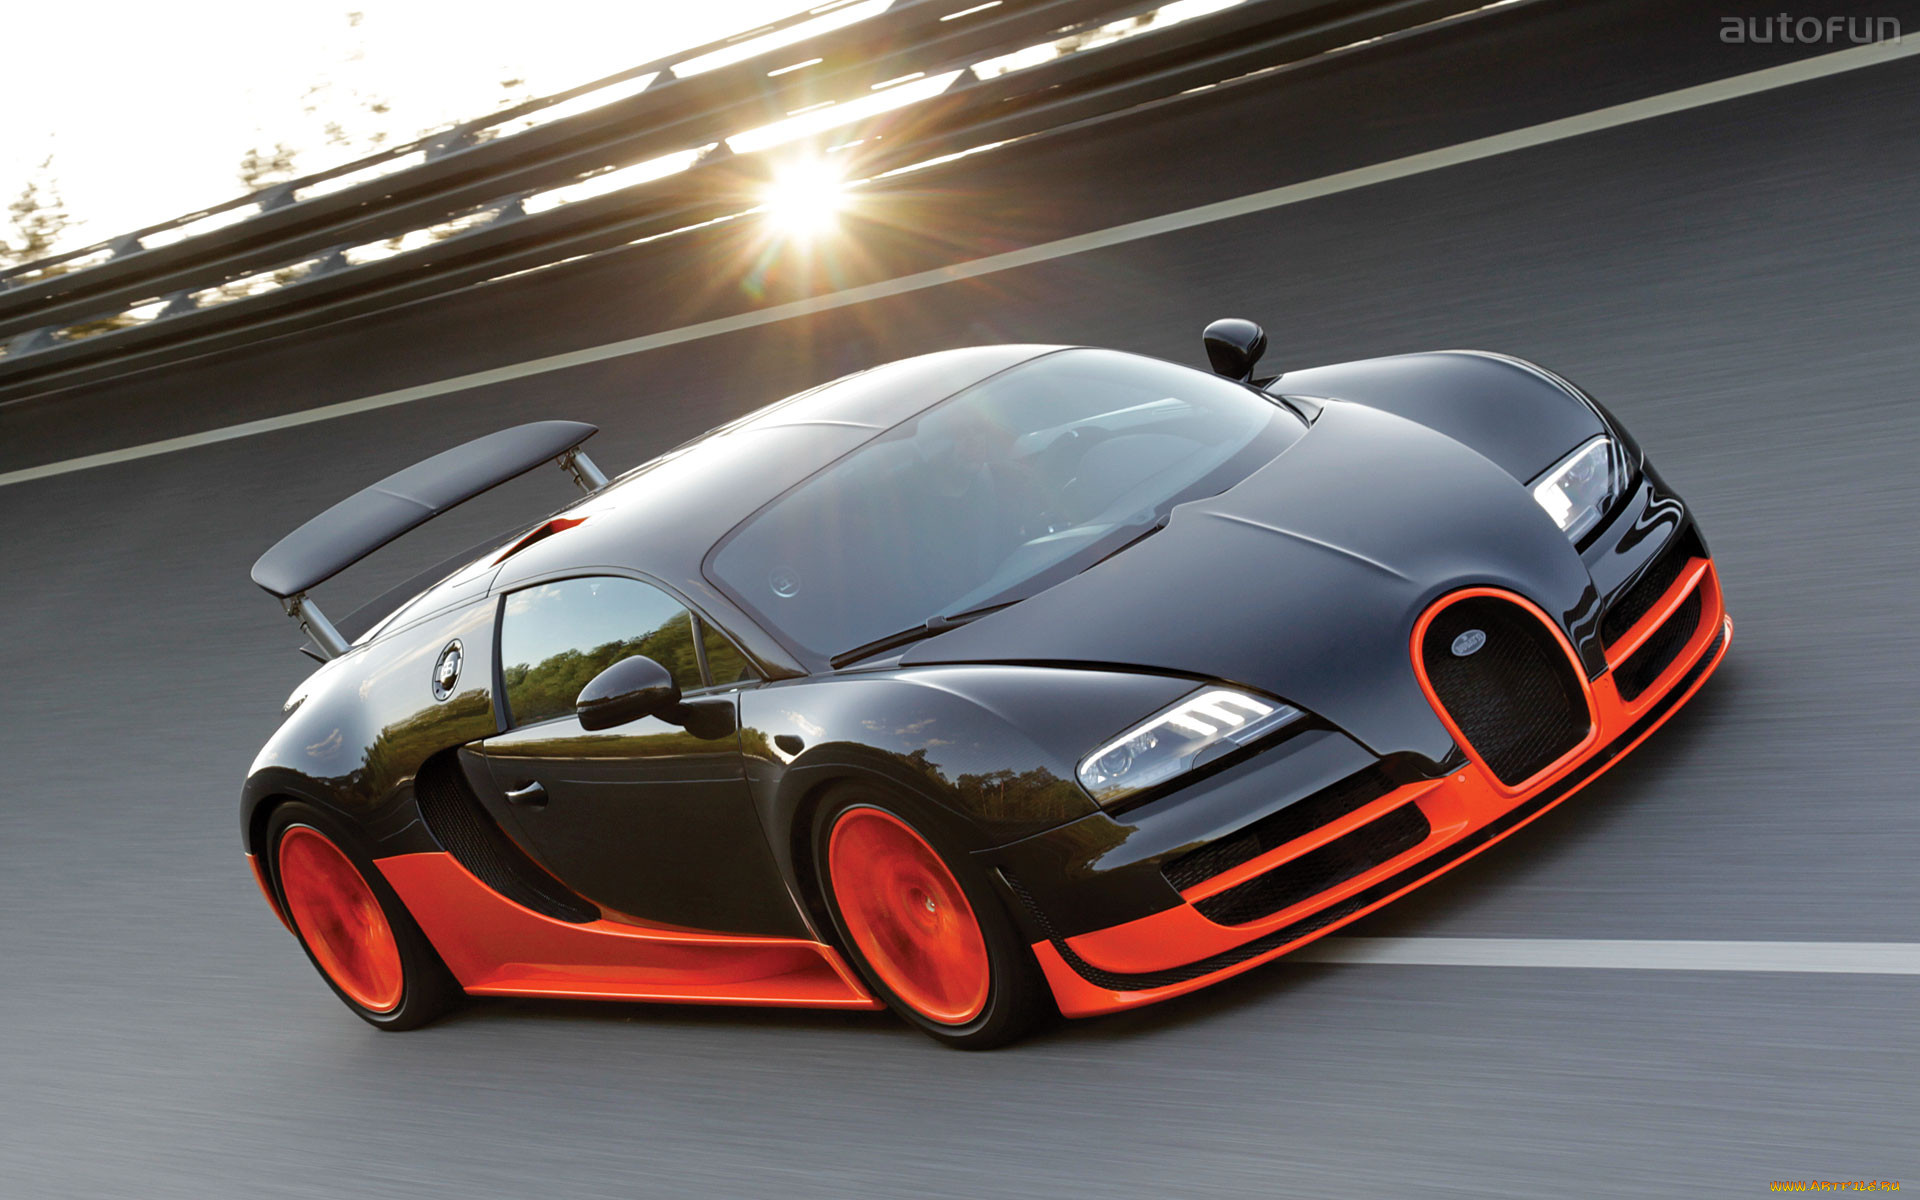 Какая машина быстро едет. Bugatti Veyron Supersport. Бугатти Вейрон 16 4 super Sport. 2010 Bugatti Veyron SS. Bugatti Veyron супер спорт.